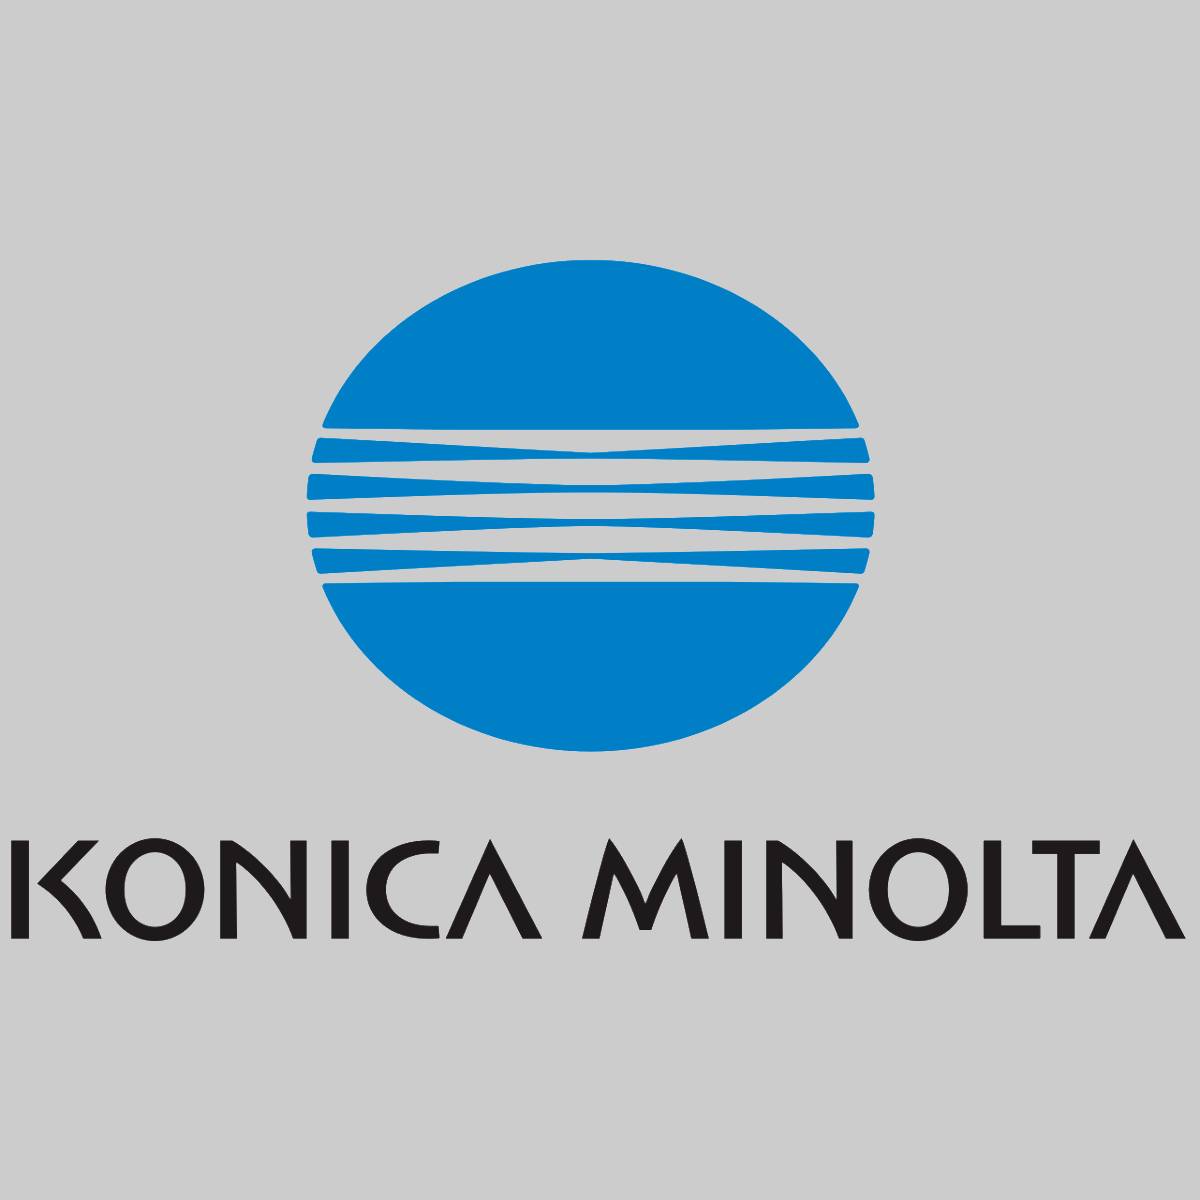 "Original Konica Minolta Resttonerbehälter A0XP-WY1 A0XPWY1 für Bizhub C452 C552